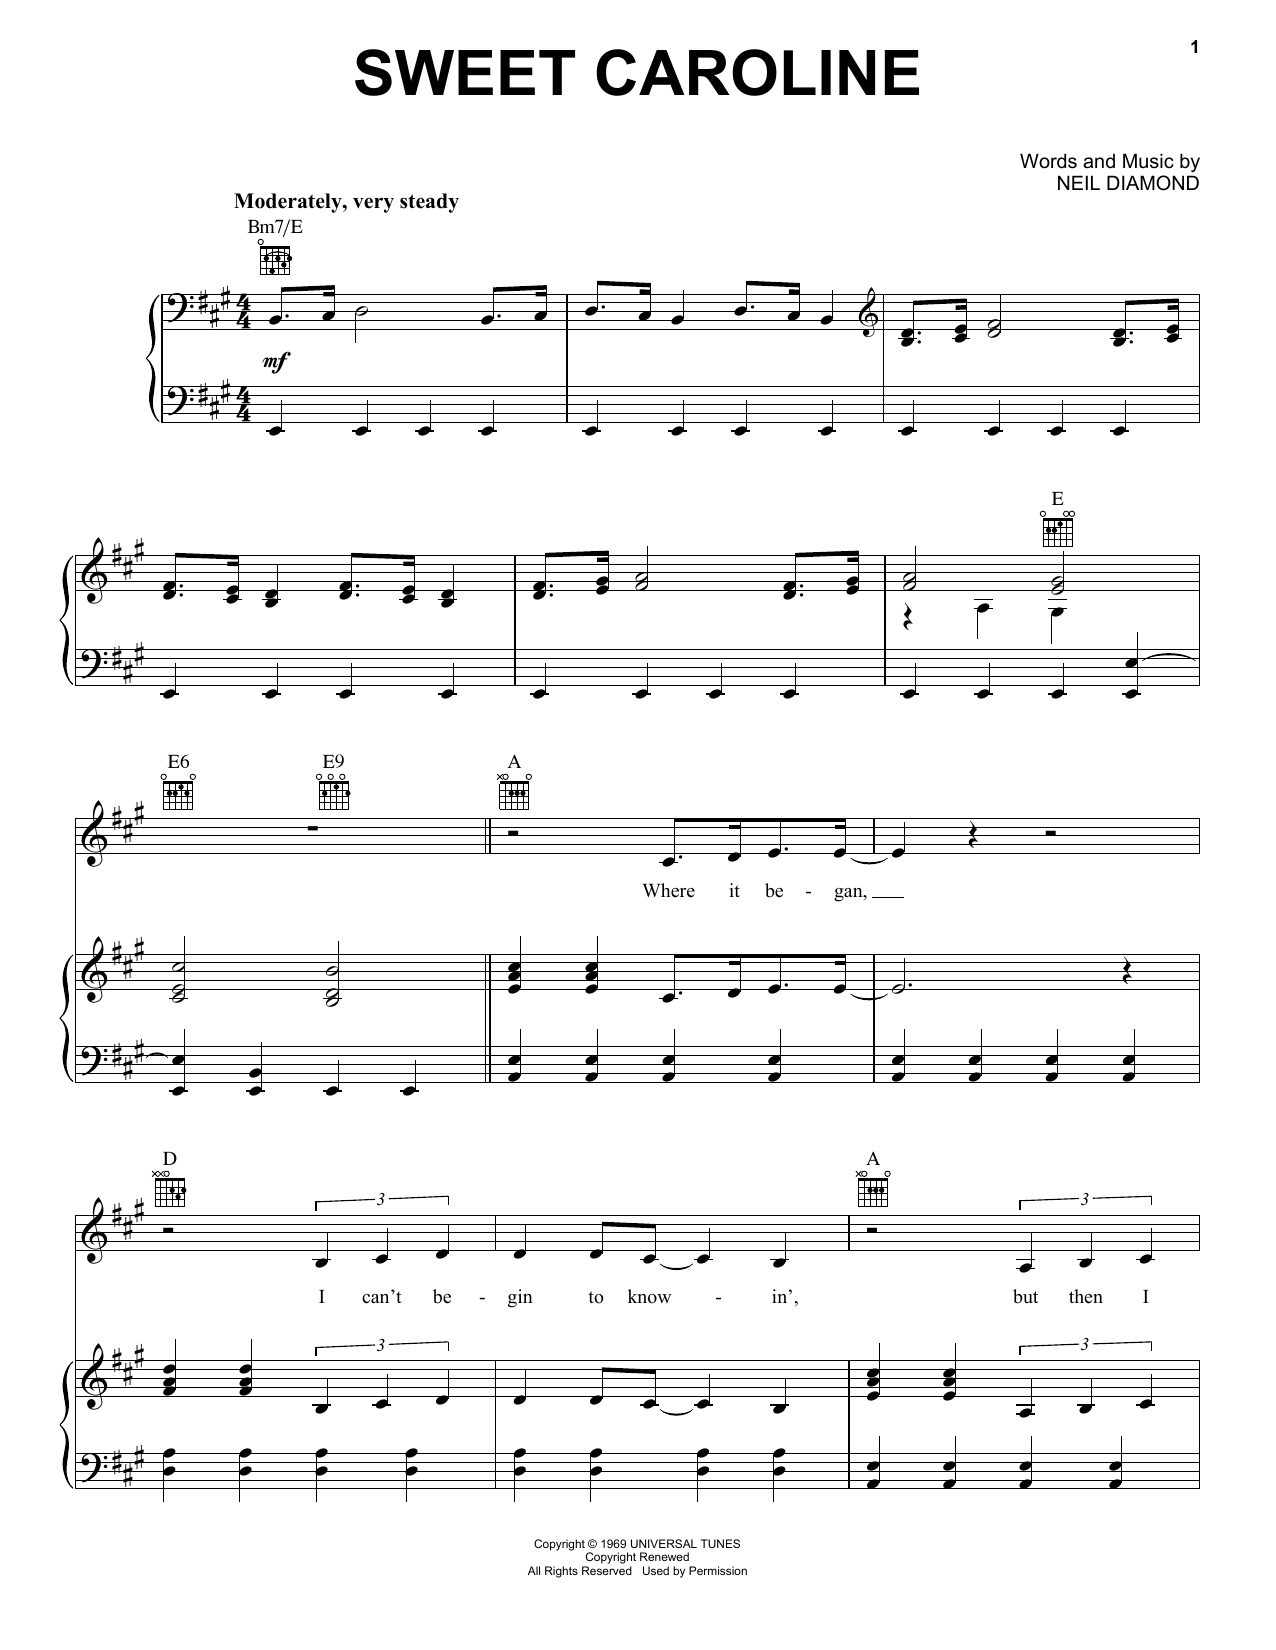 Neil Diamond Sweet Caroline Sheet Music Notes & Chords for Real Book – Melody, Lyrics & Chords - Download or Print PDF